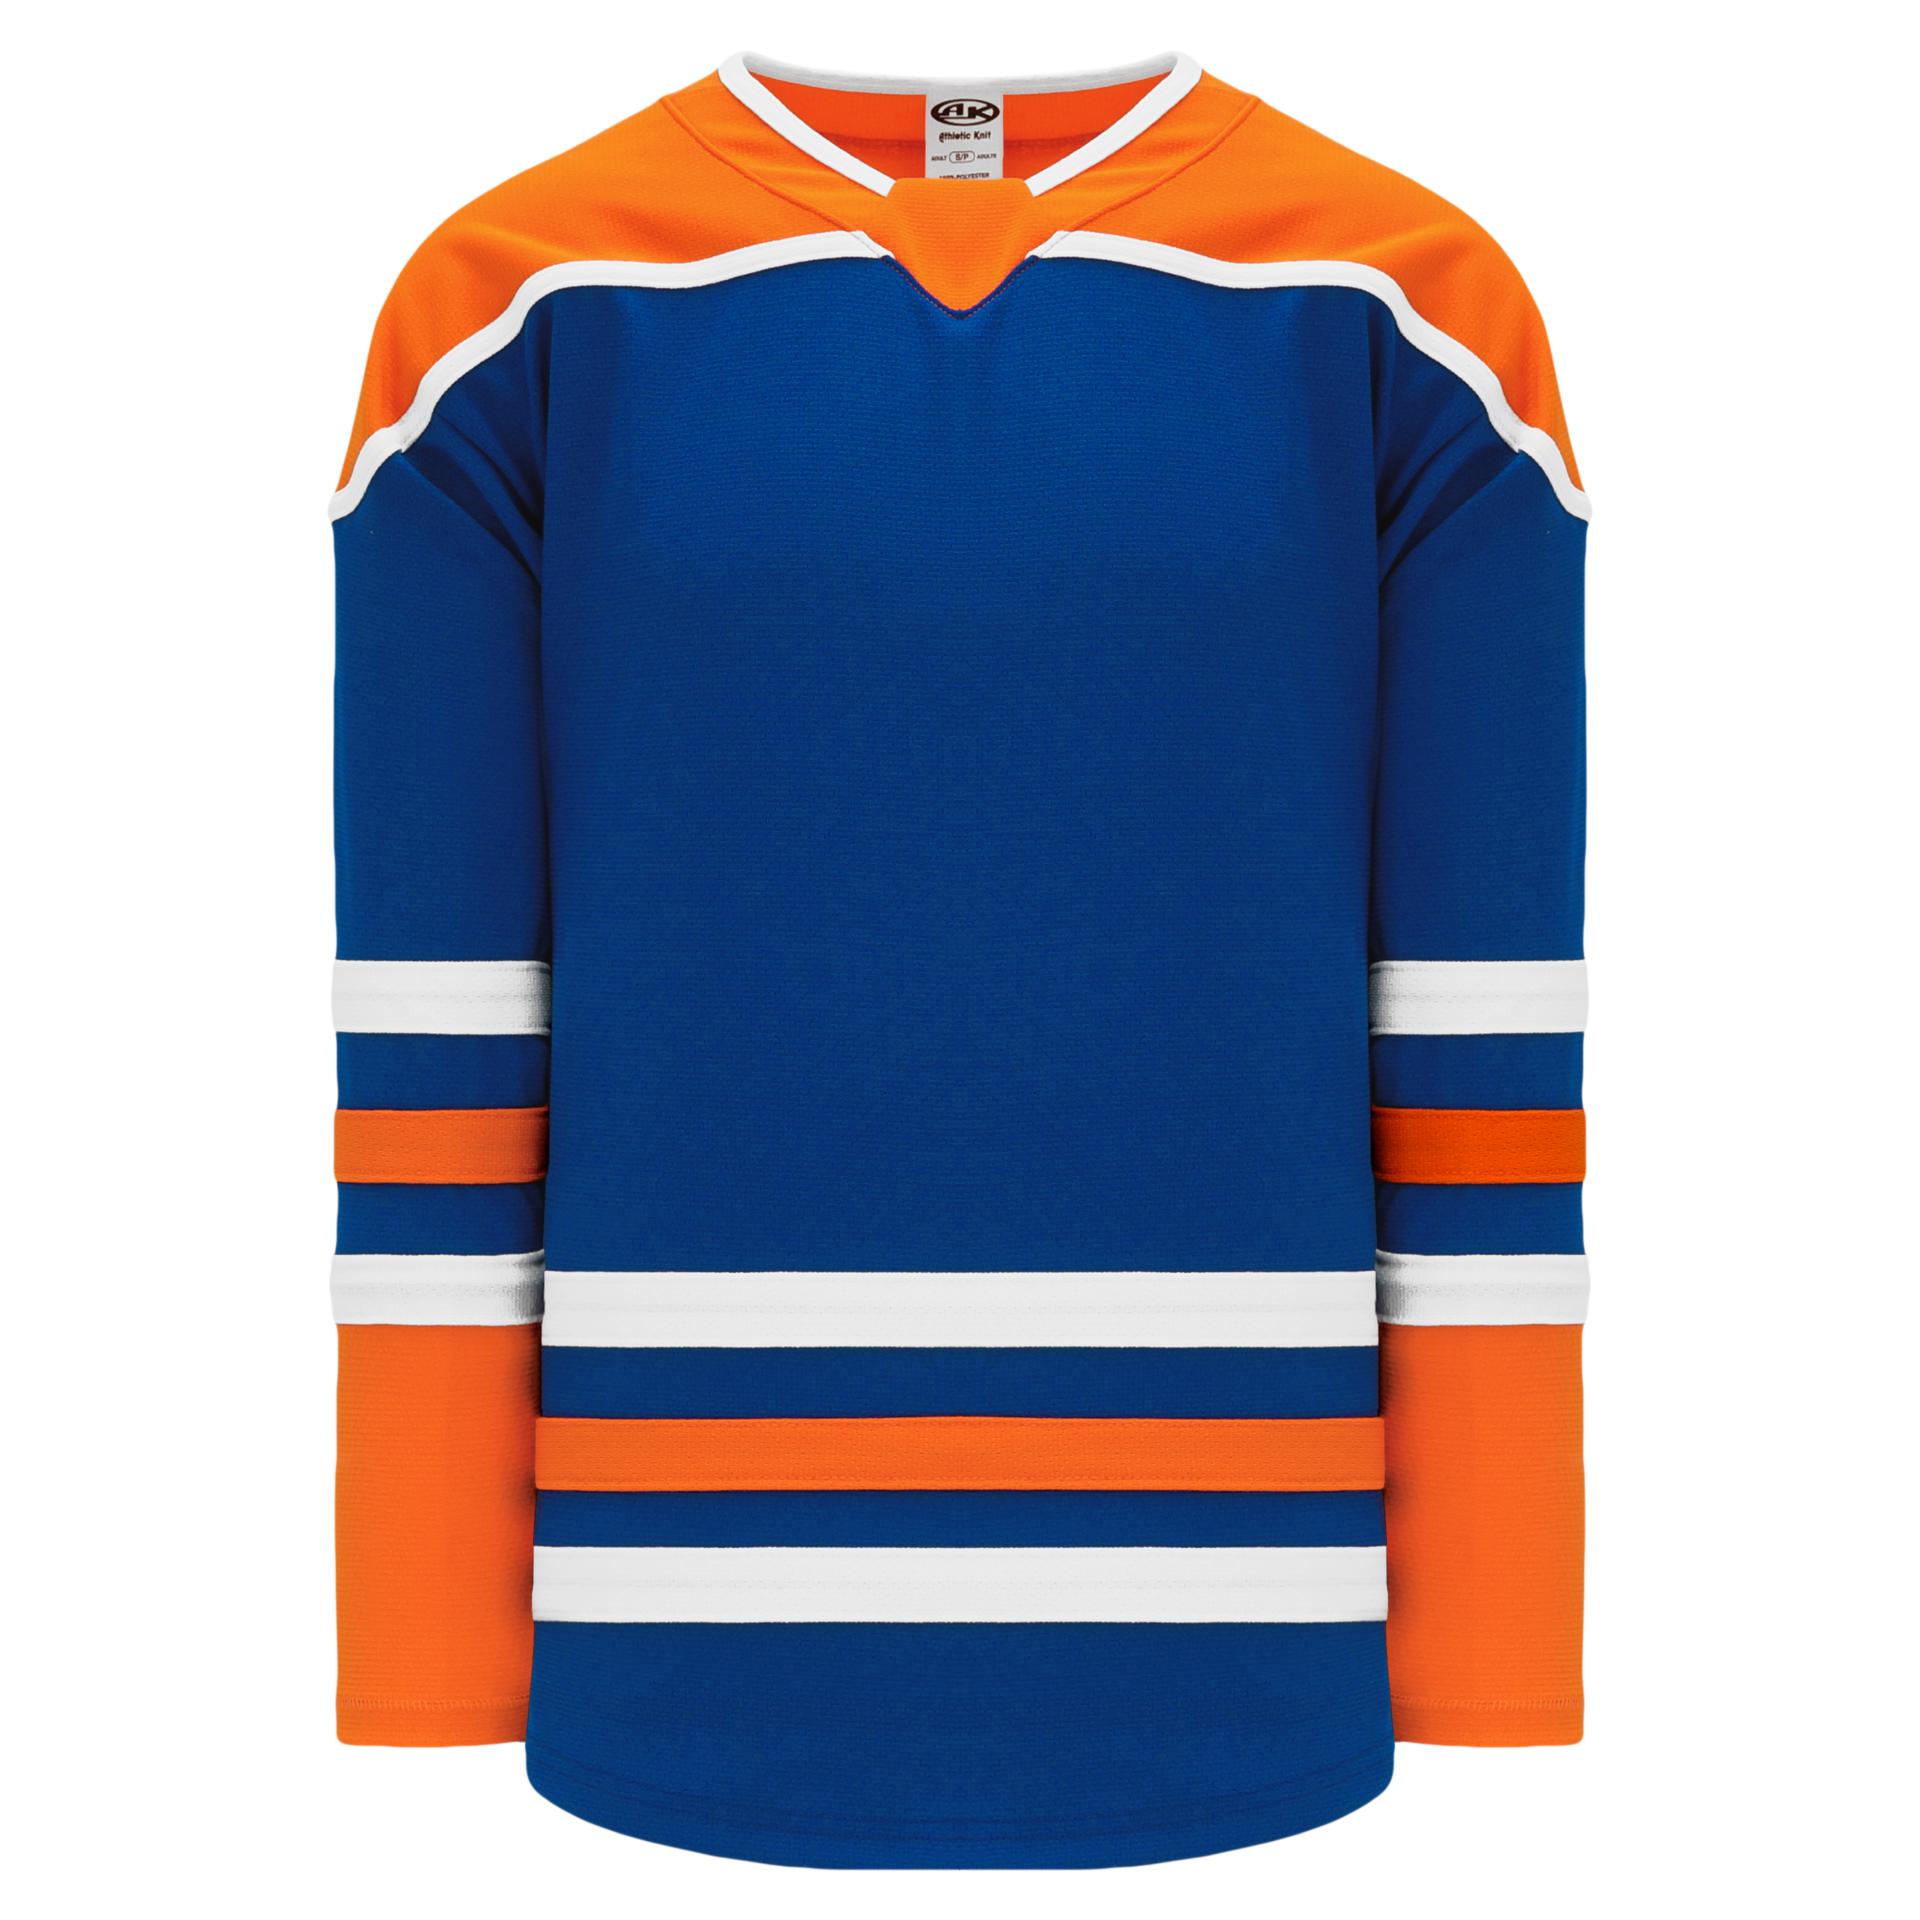 Edmonton Oilers NHL Jerseys - Hockey Custom Throwback Jerseys